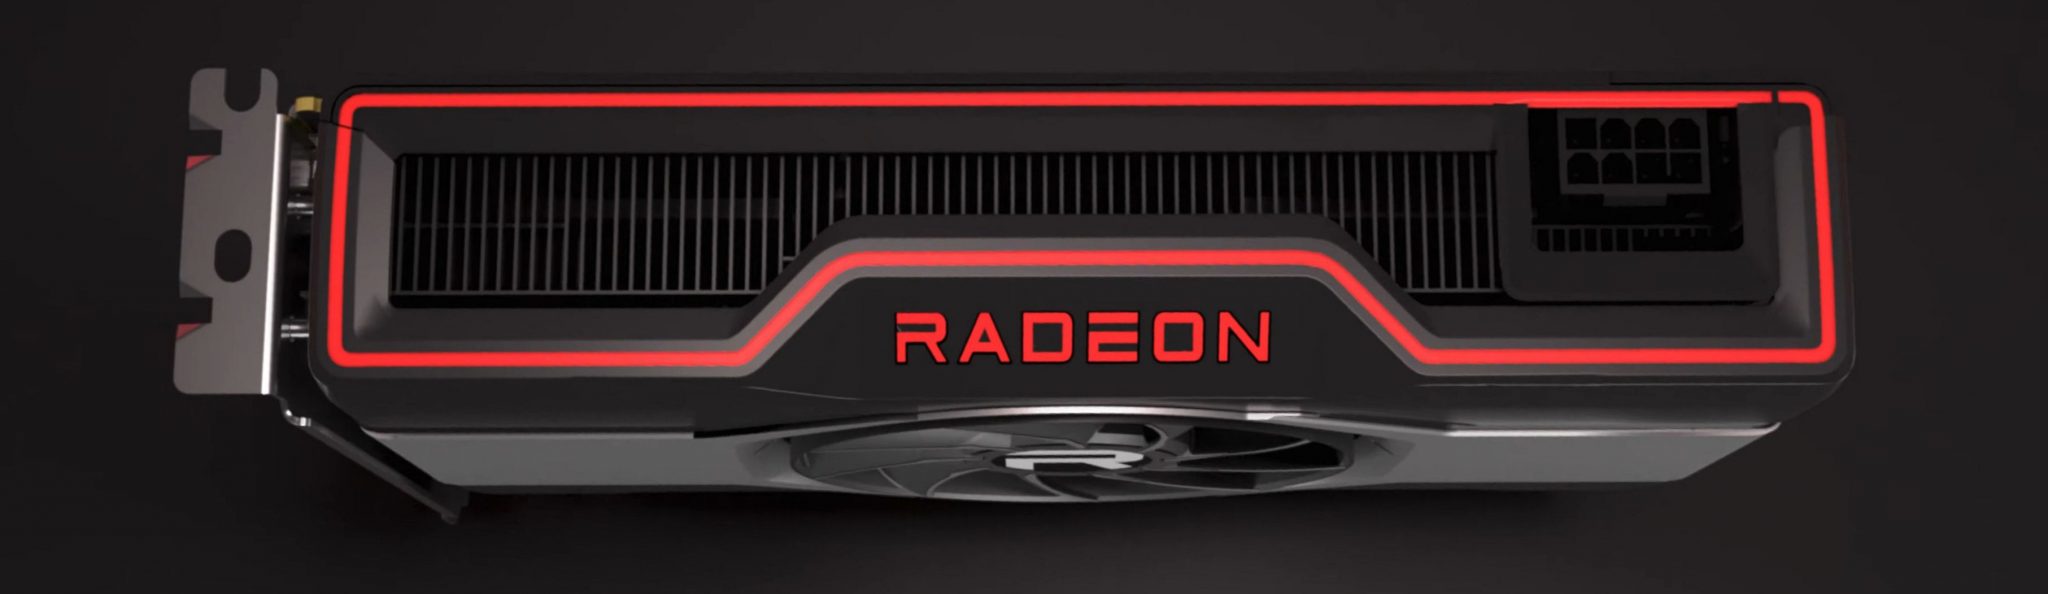 Radeon-RX-6600-6000-hero-banner-2048x594.jpeg